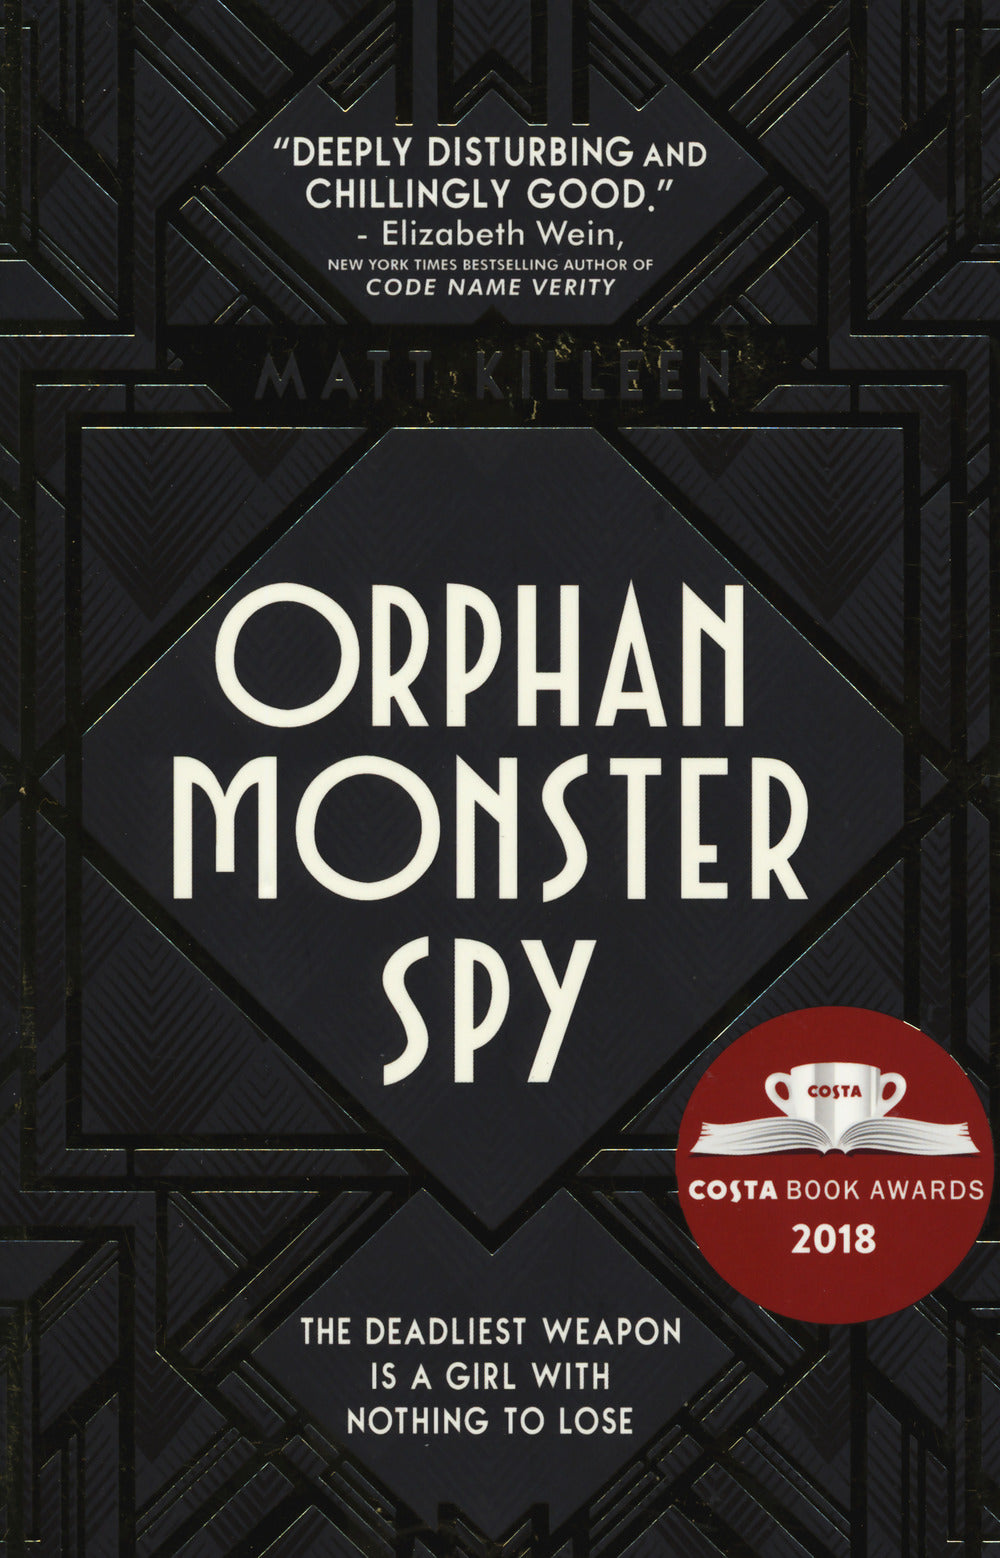 Orphan monster spy.